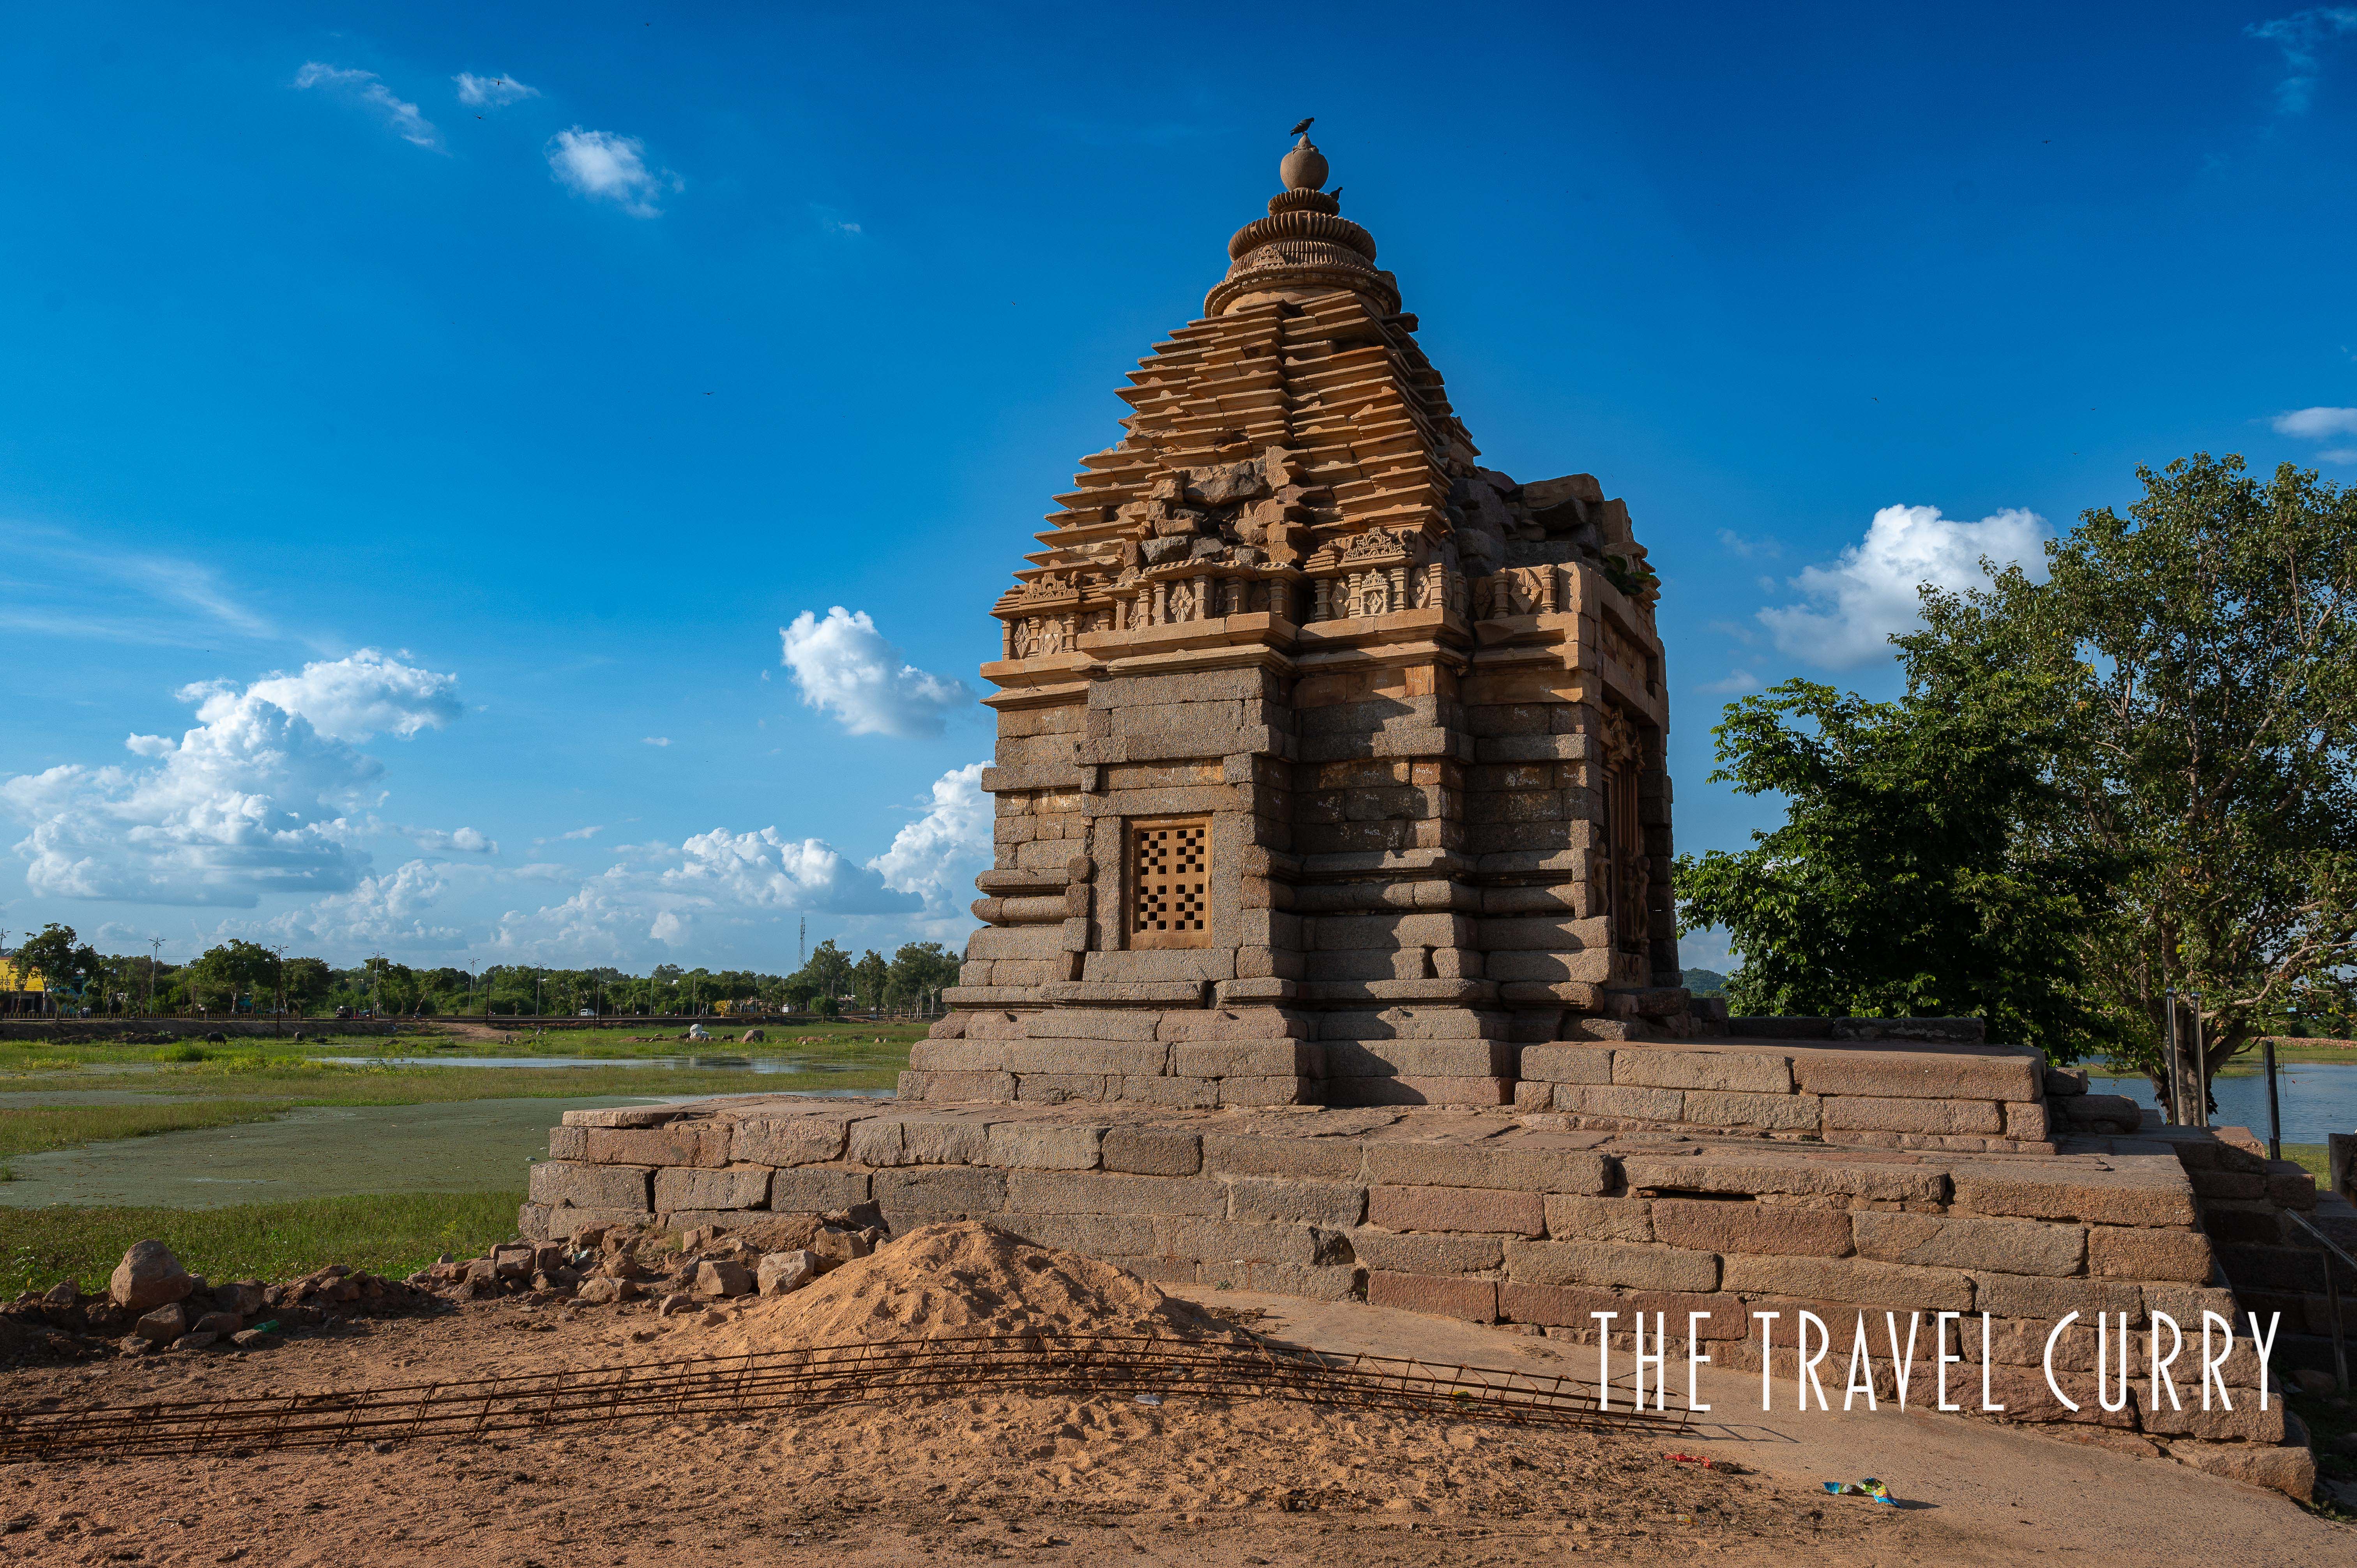 The humble Brahma Temple in Khajuraho